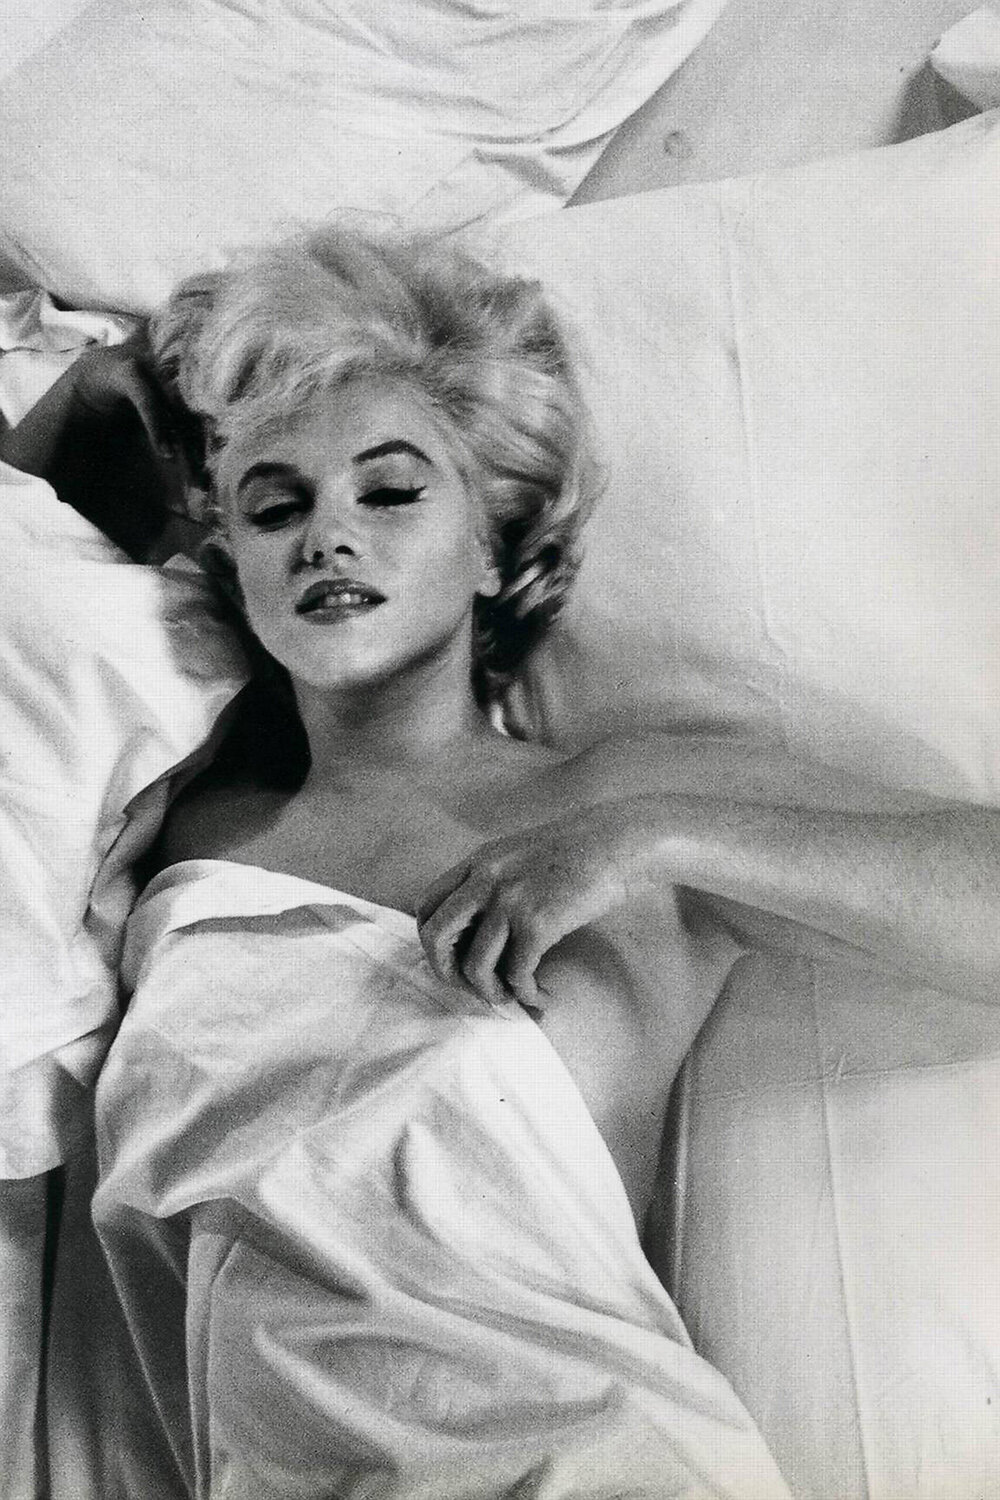 Marilyn Monroe in White Dress, Black and White Vintage Wall Art